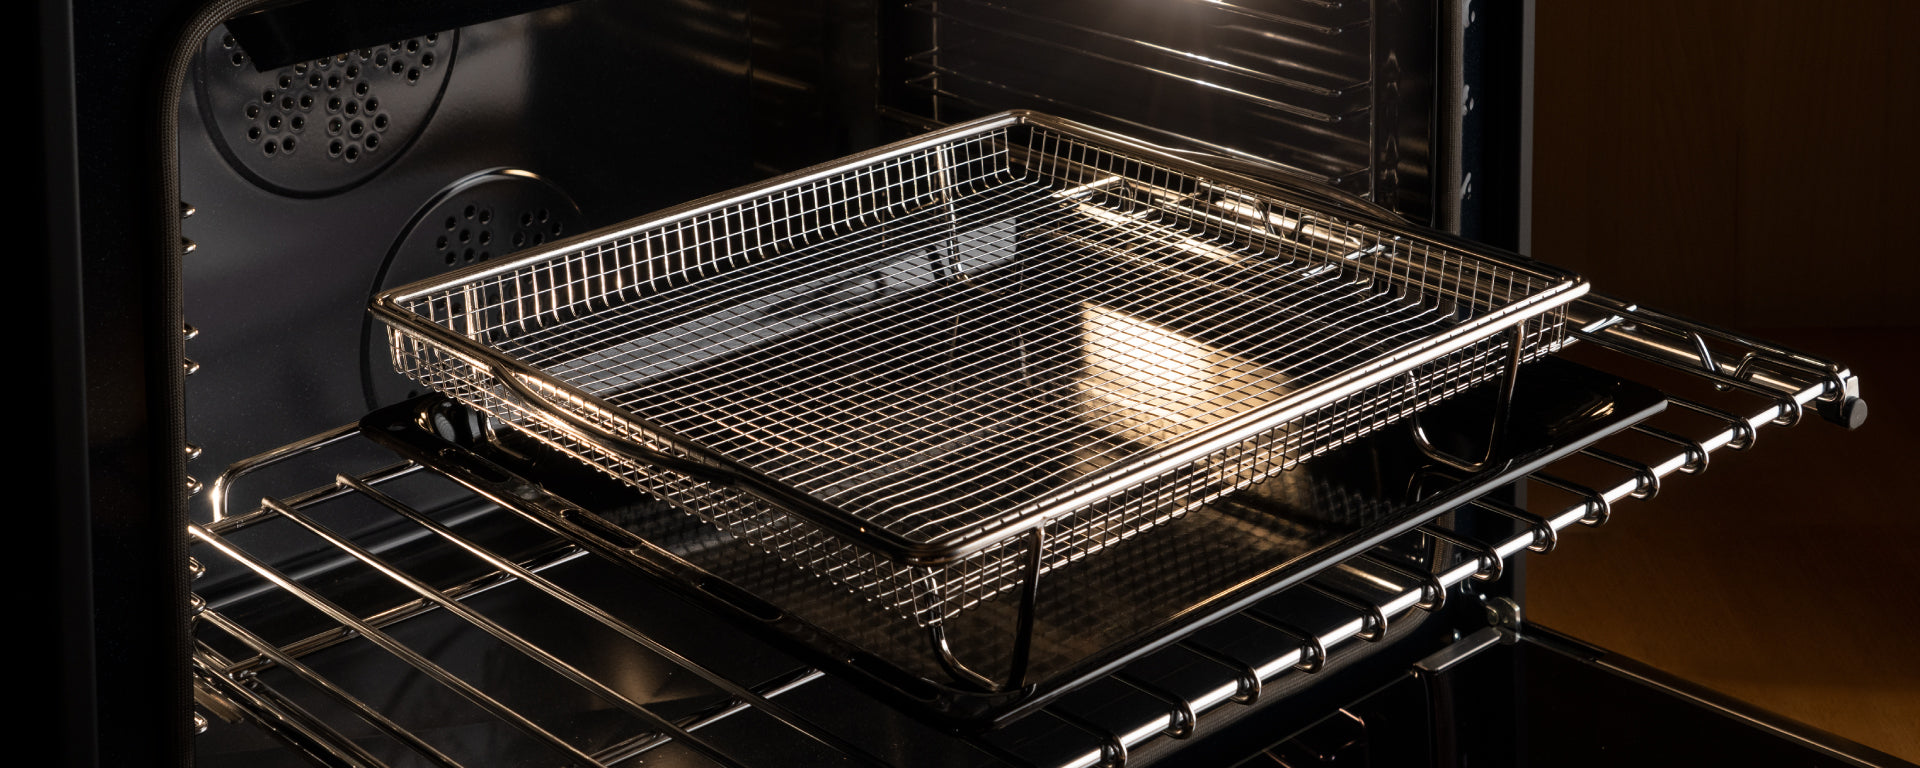 Bertazzoni Professional Series 30" 4 Heating Zones Nero Freestanding Induction Range With 4.6 Cu.Ft. Self-Clean Oven